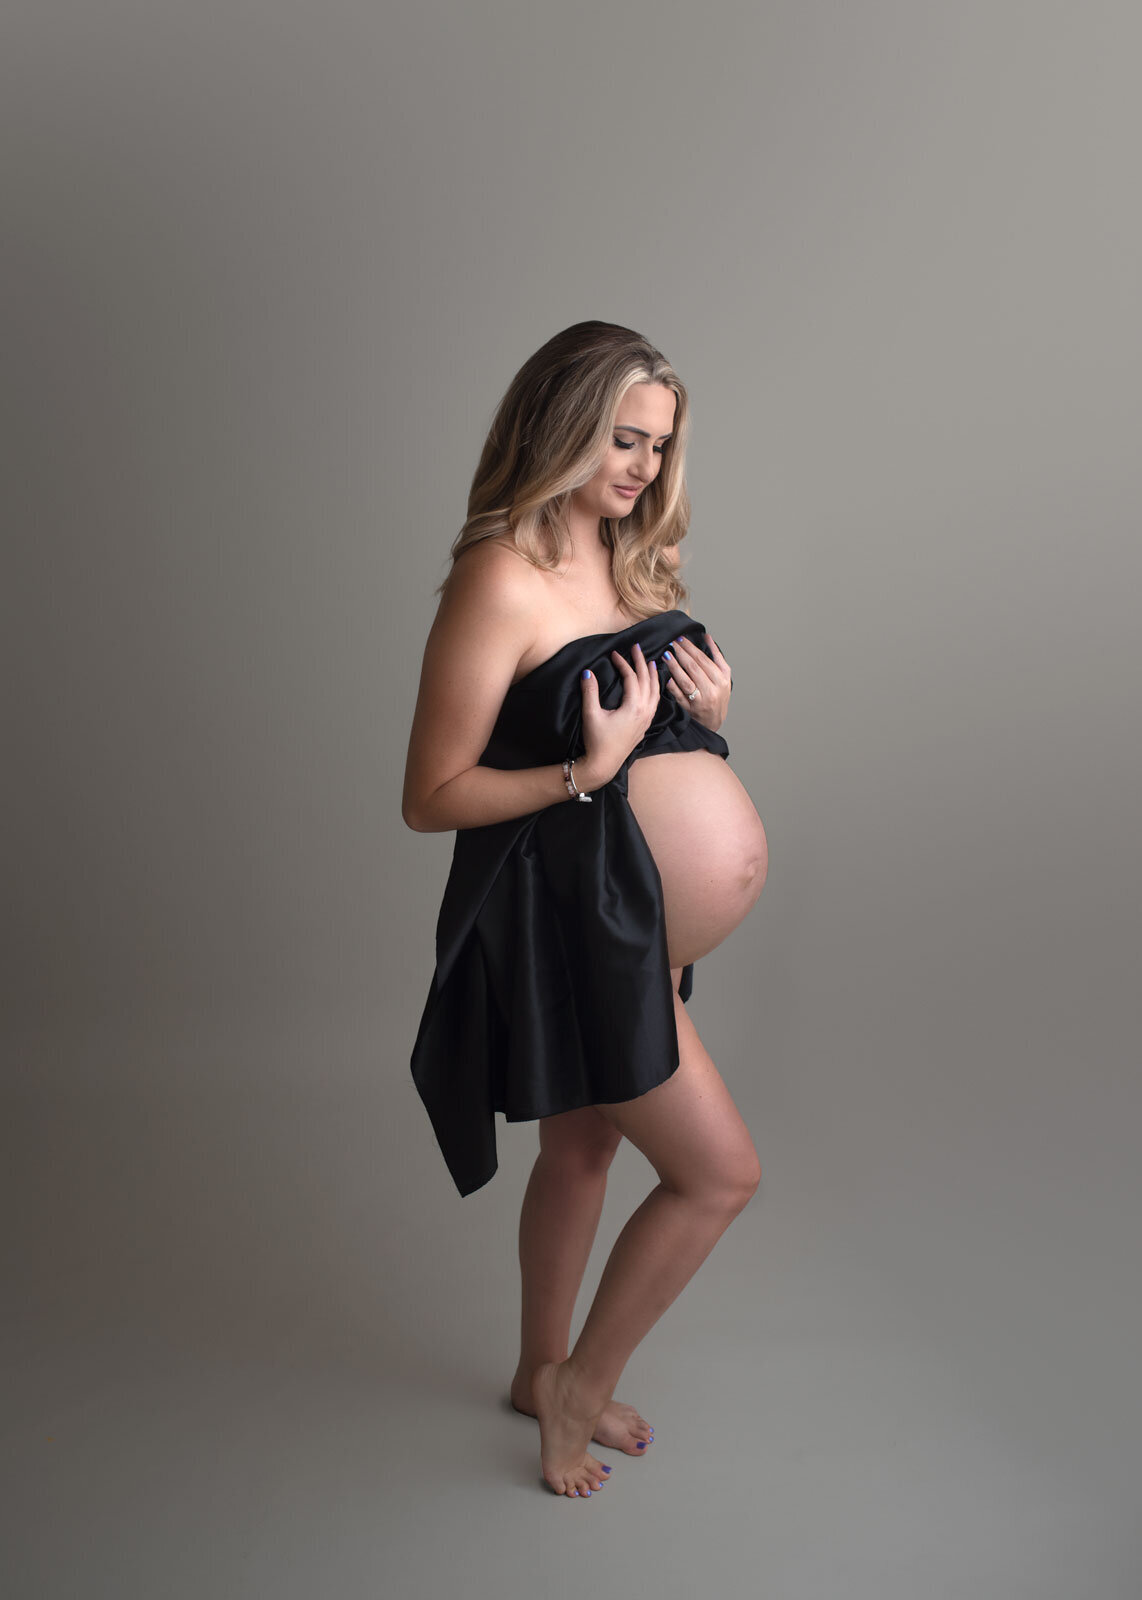 black fabric draped over pregnant woman